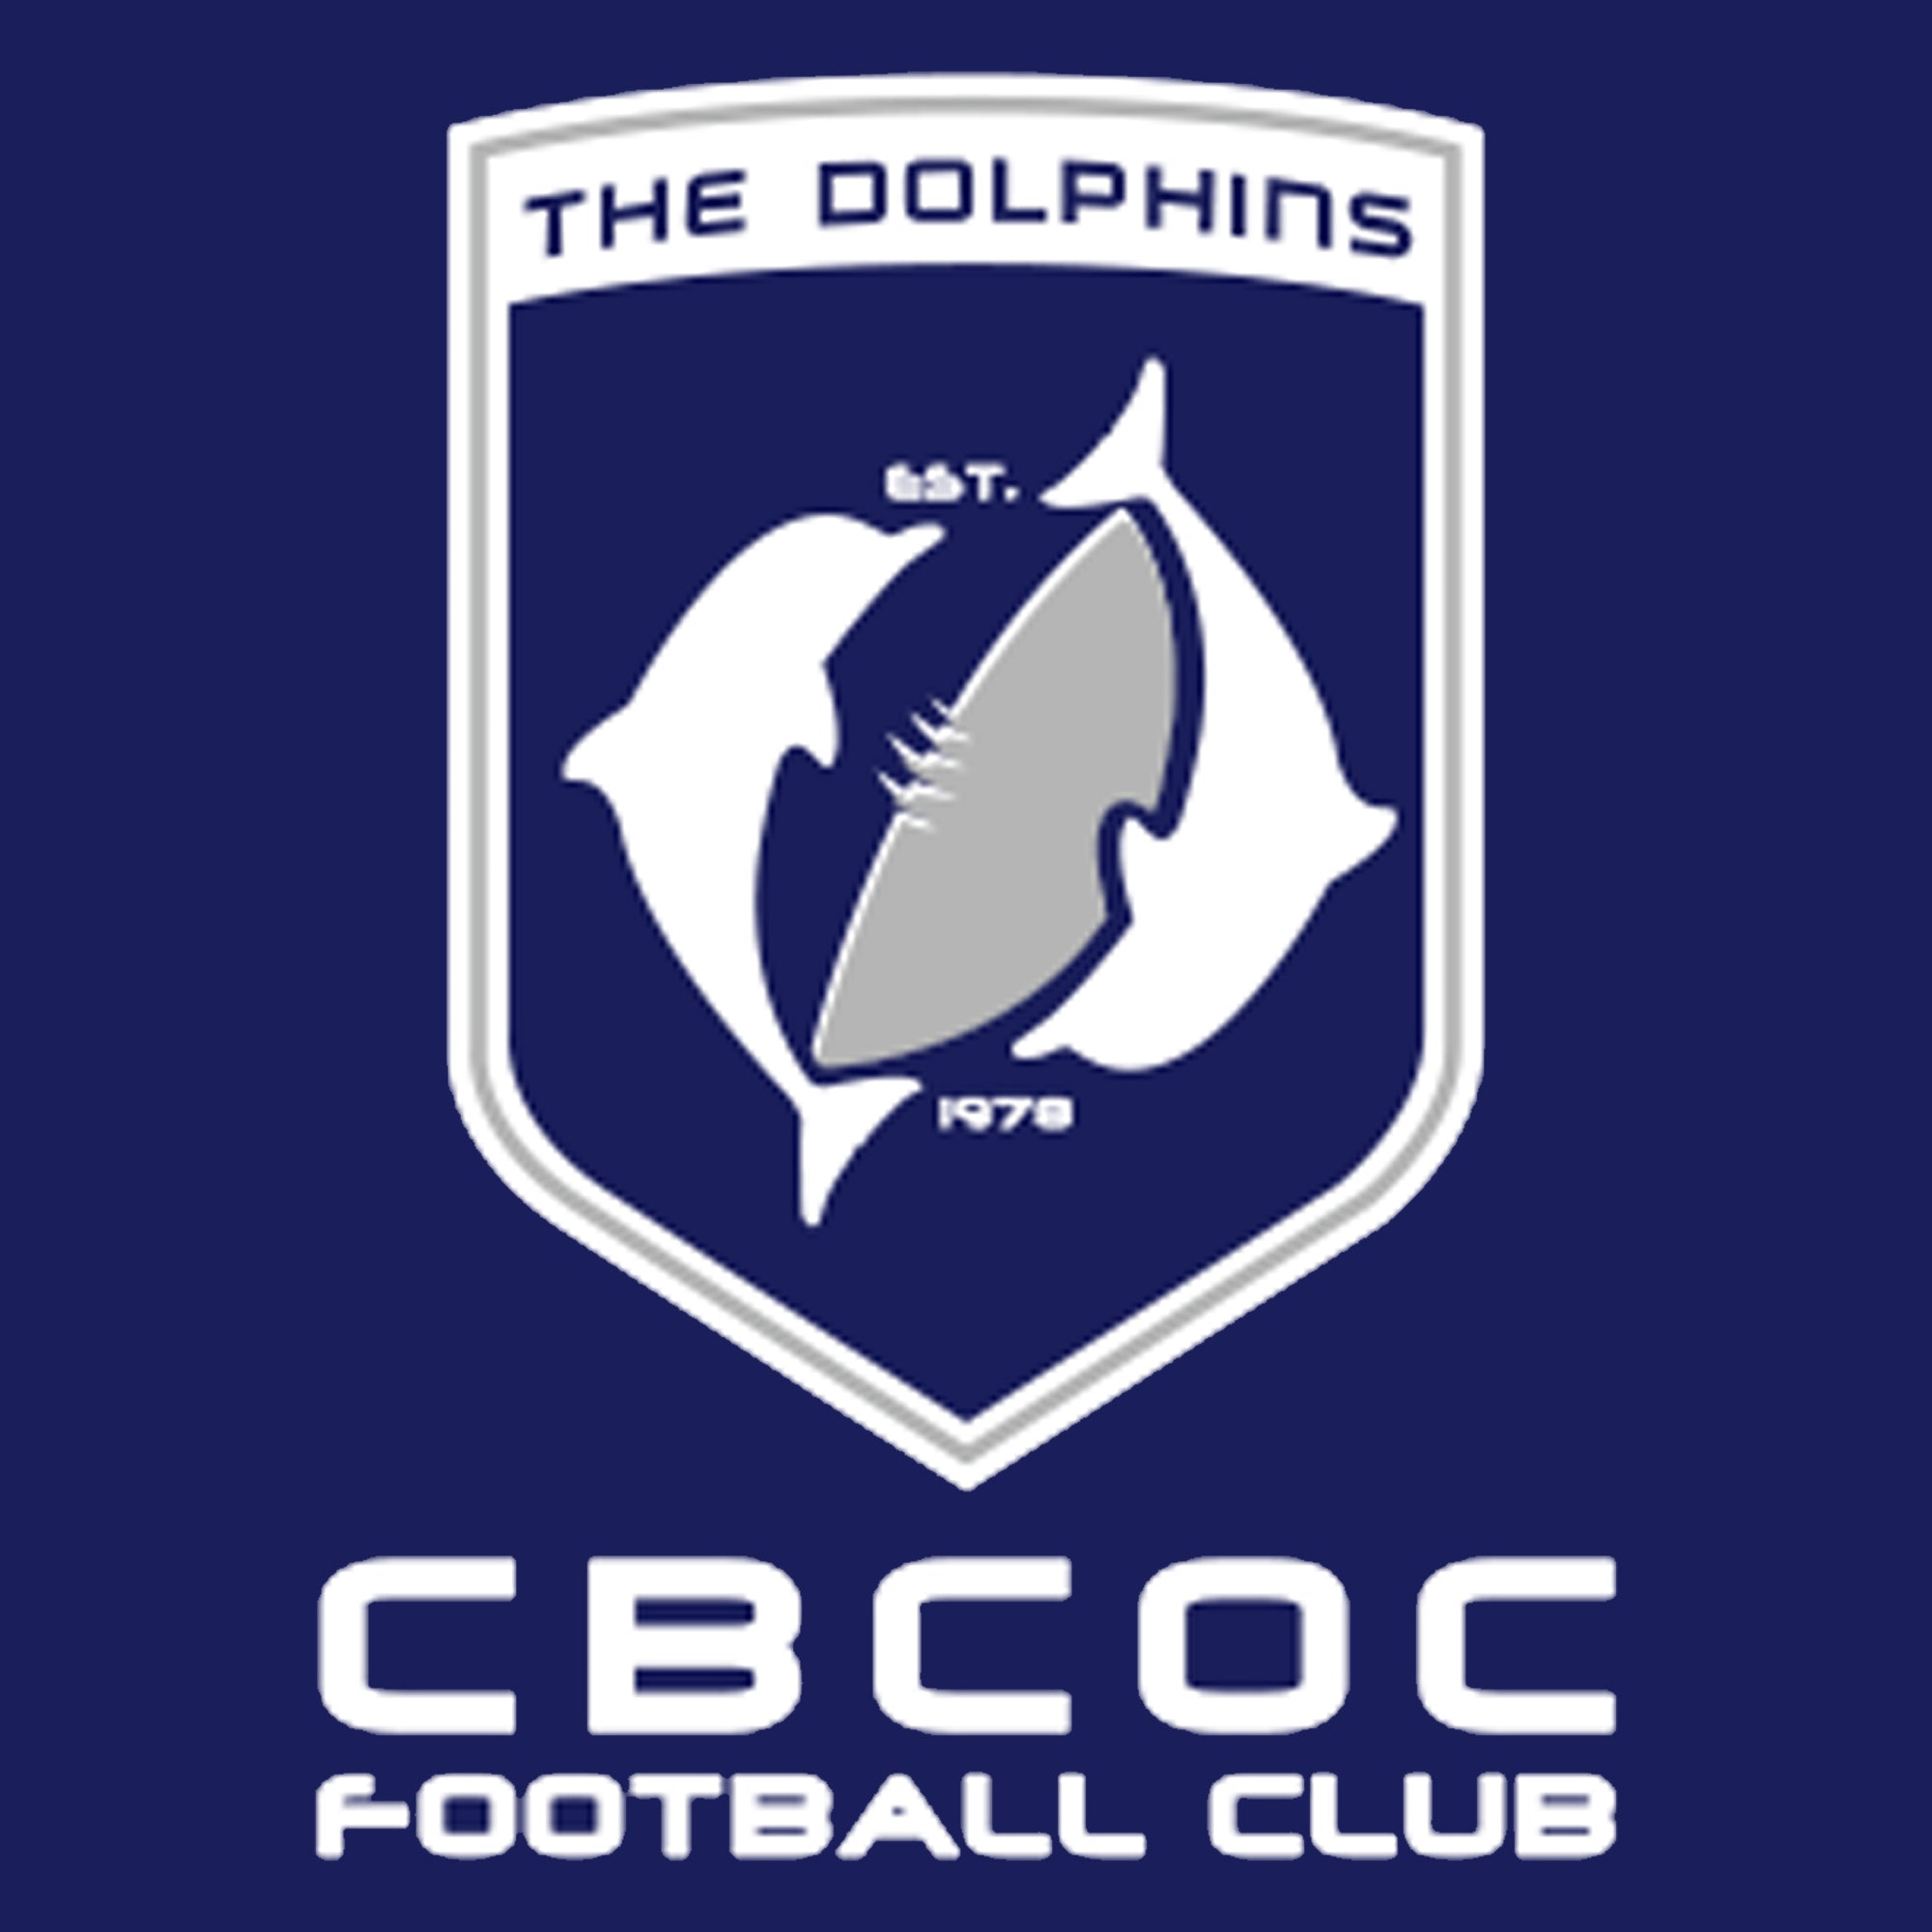 CBC Old Collegians Football Club